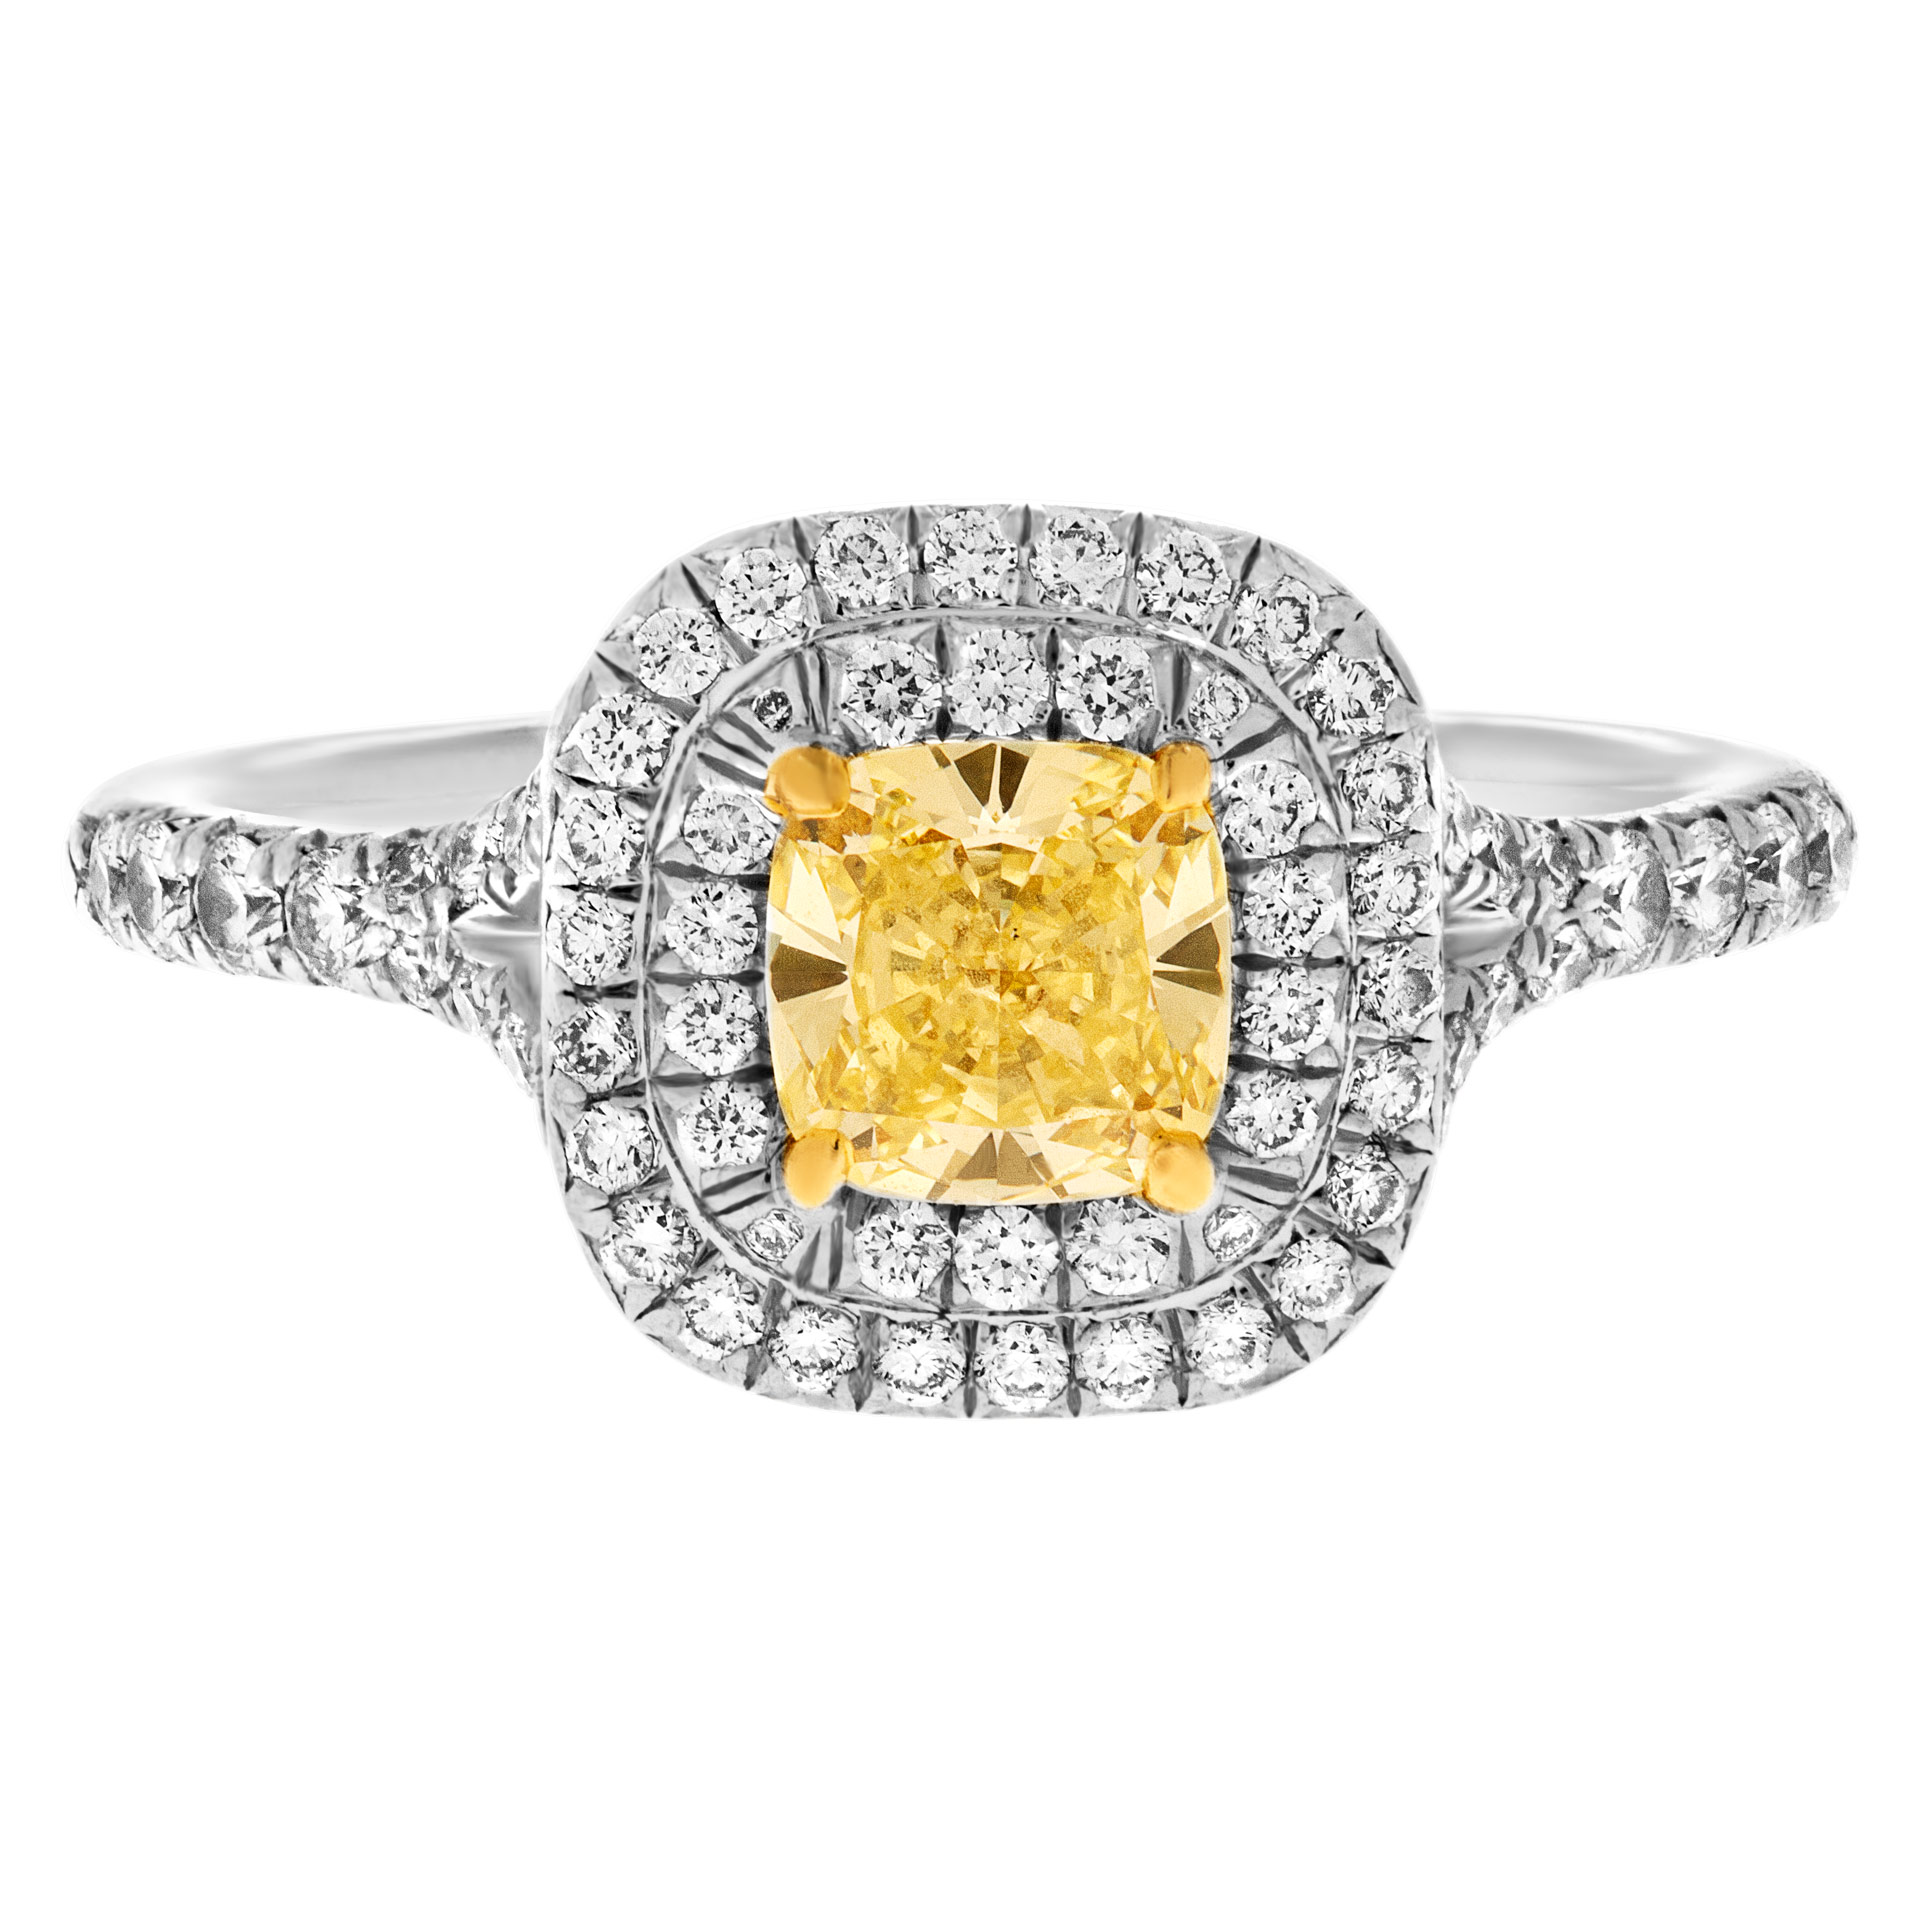 Tiffany & Co. Soleste fancy yellow diamond ring image 1